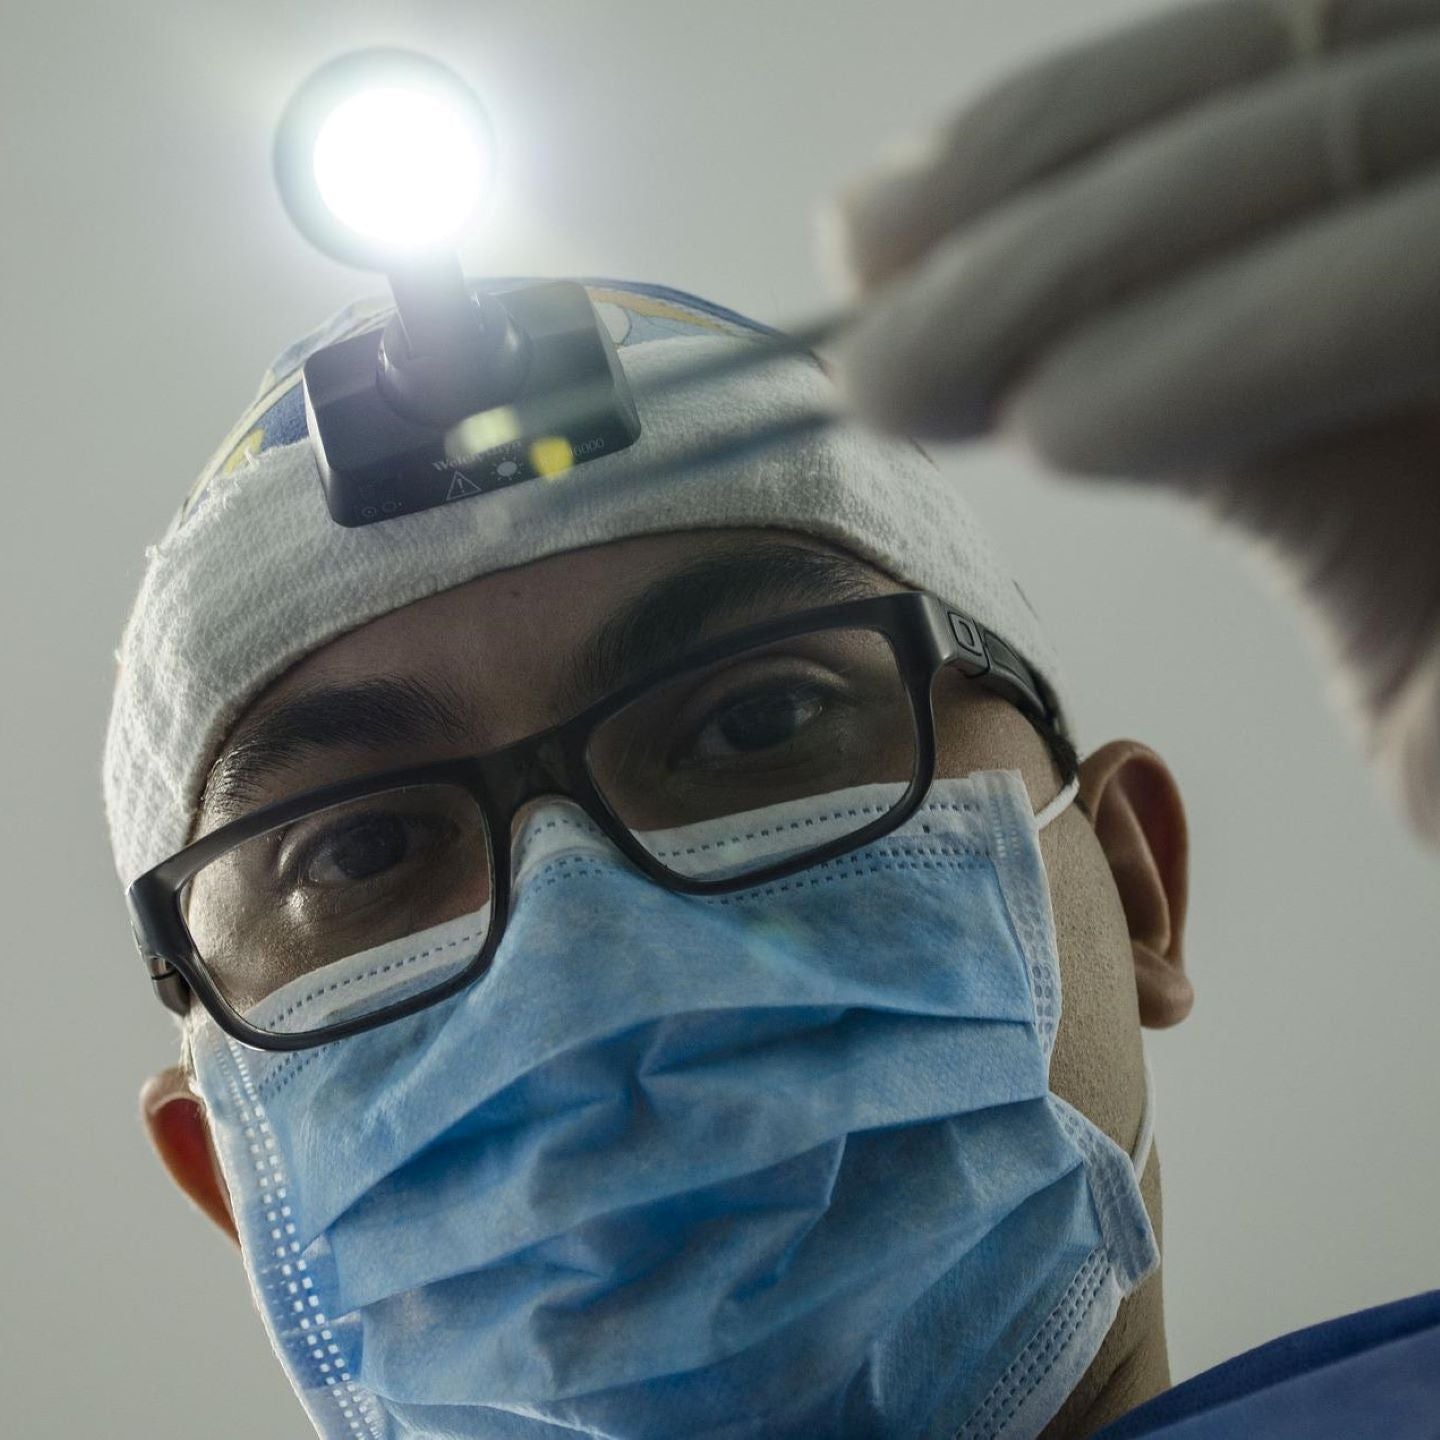 Zahnarzt beugt sich über Patienten